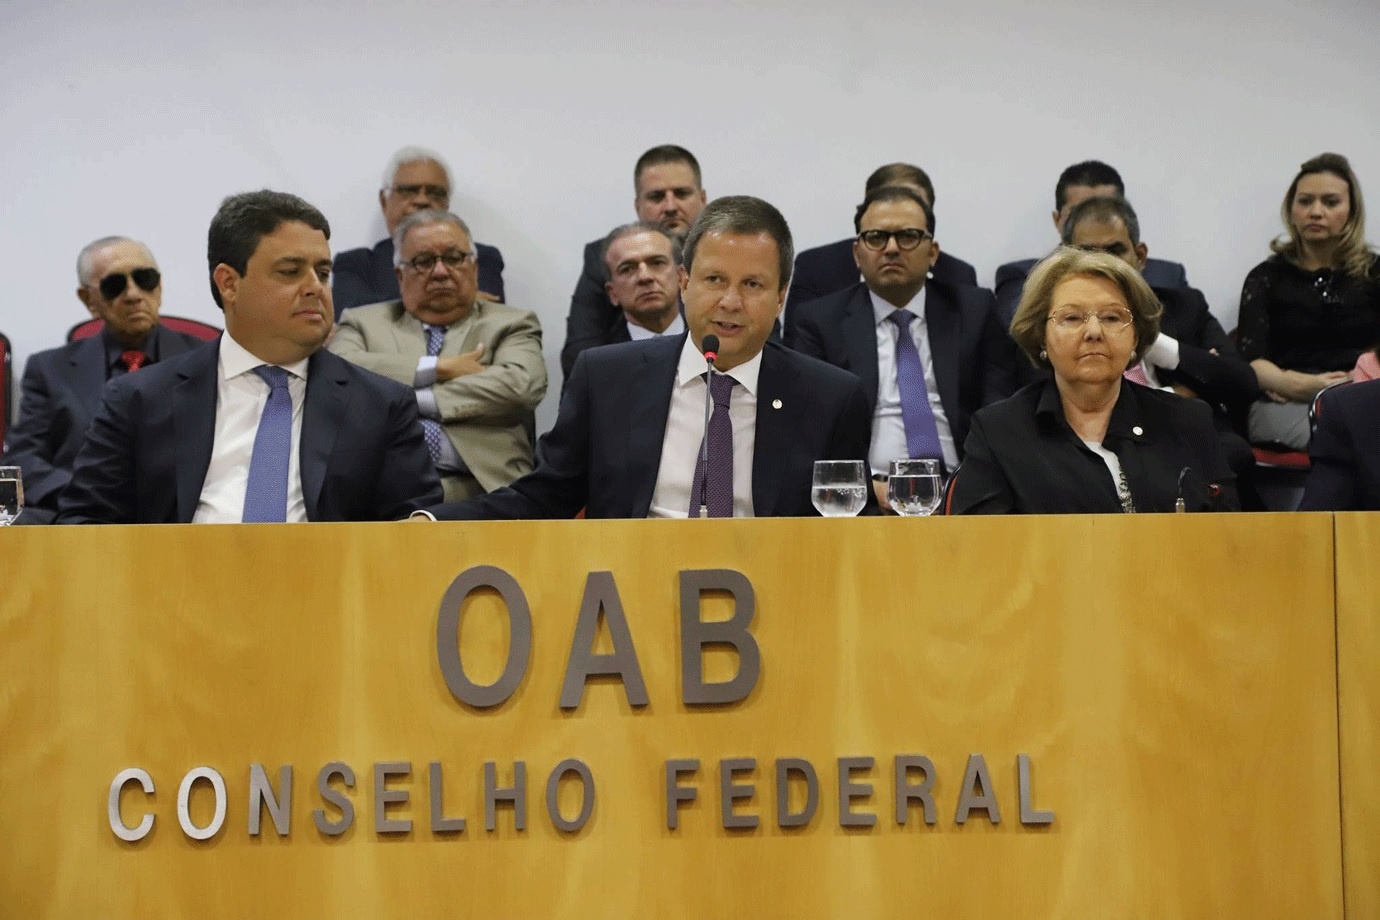 The Federal Council of the Brazilian Bar Association (CFOAB).